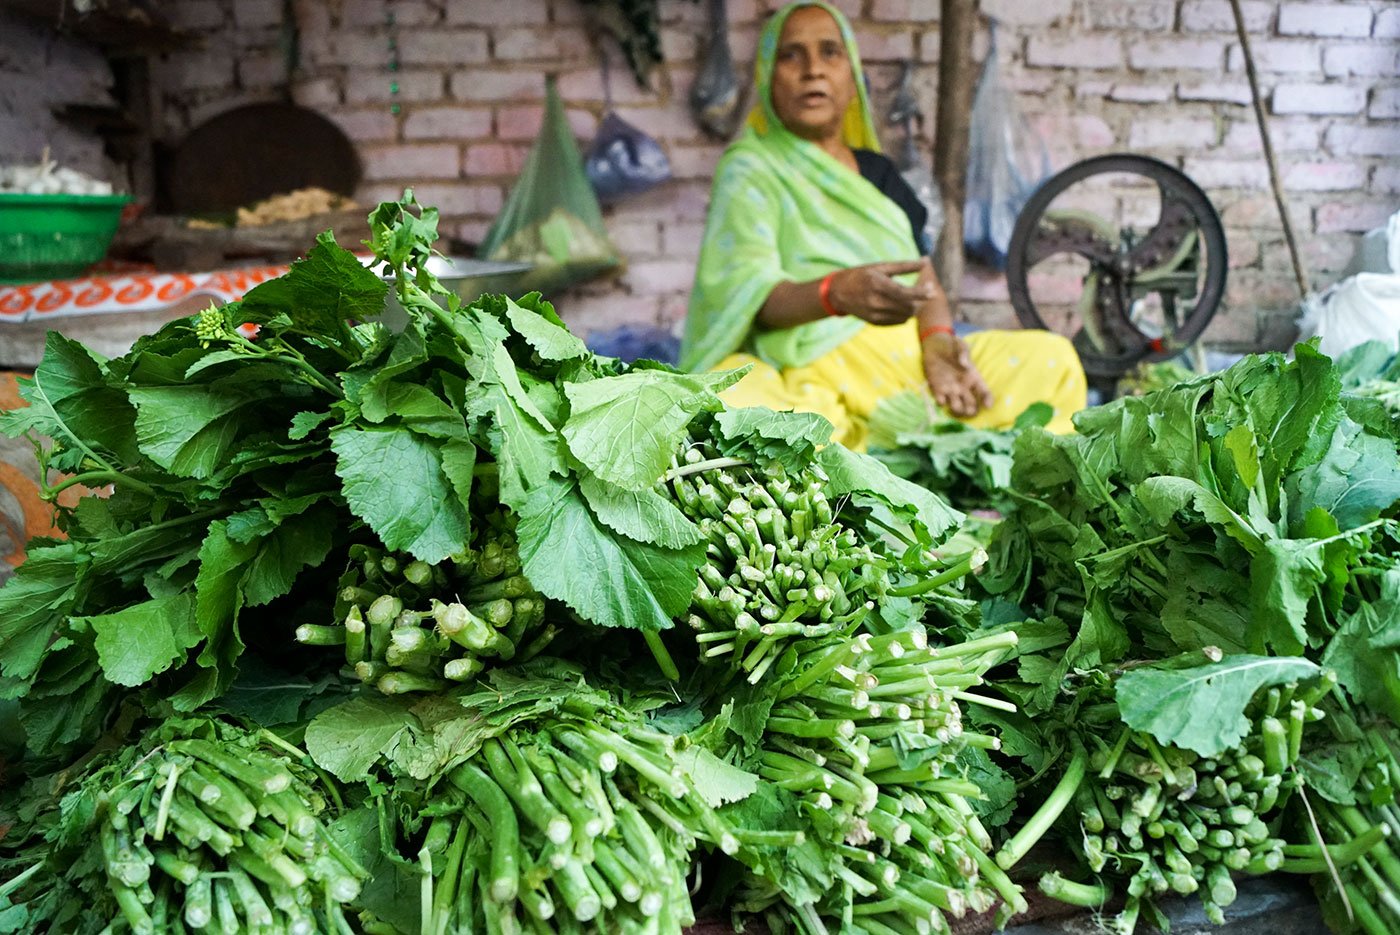 A women selling vegetables in the Delhi market